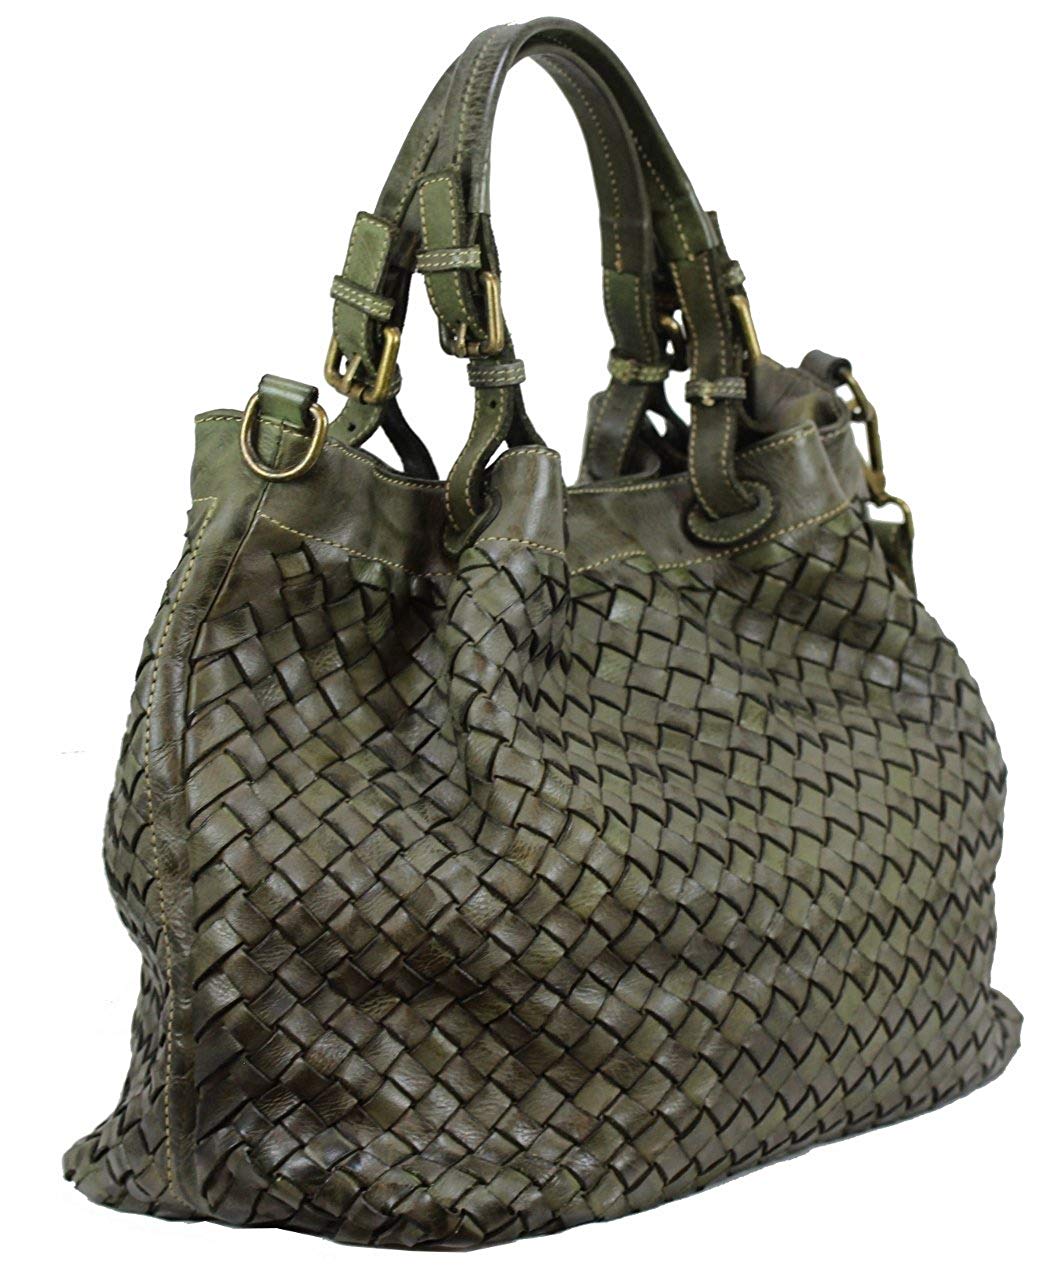 BZNA Bag Rene verde Italy Designer geflochten Damen Handtasche Schultertasche Tasche Schafsleder Shopper Neu